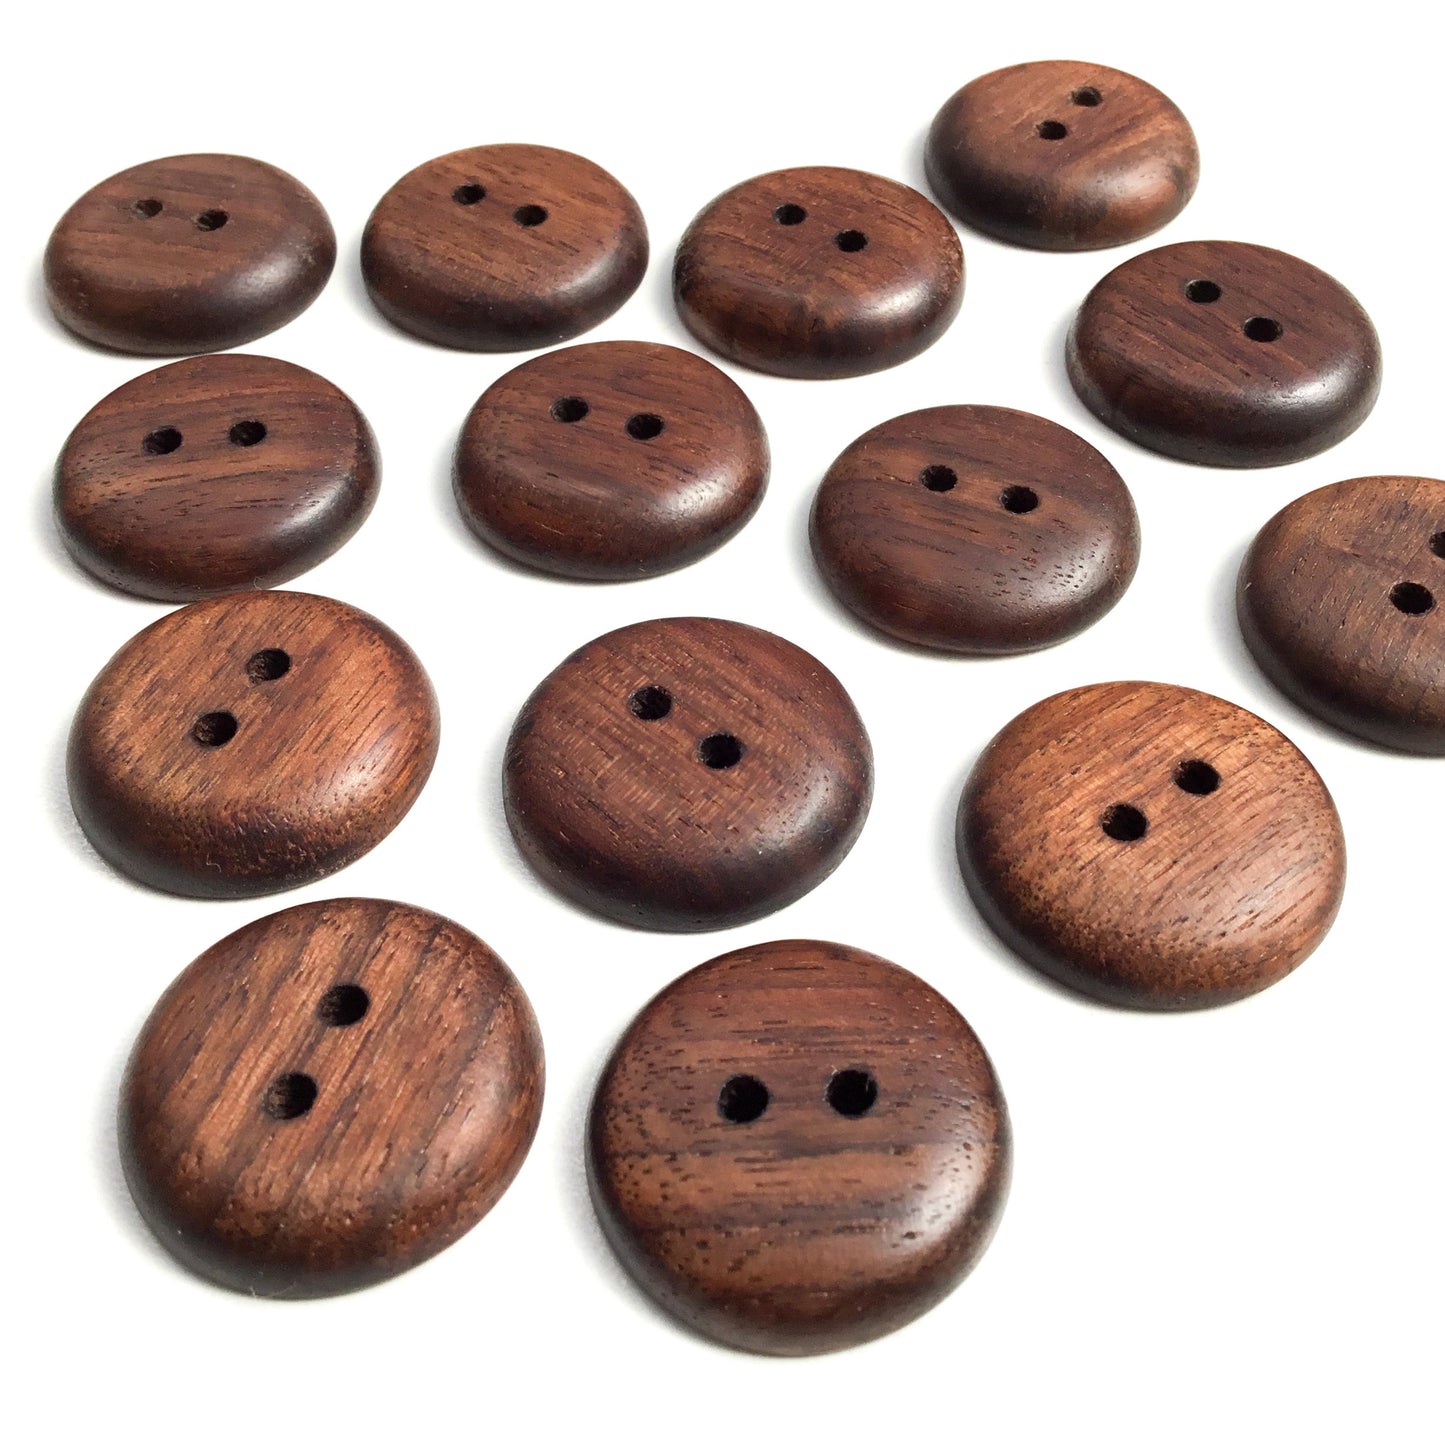 Black Walnut Wood Buttons - 1"